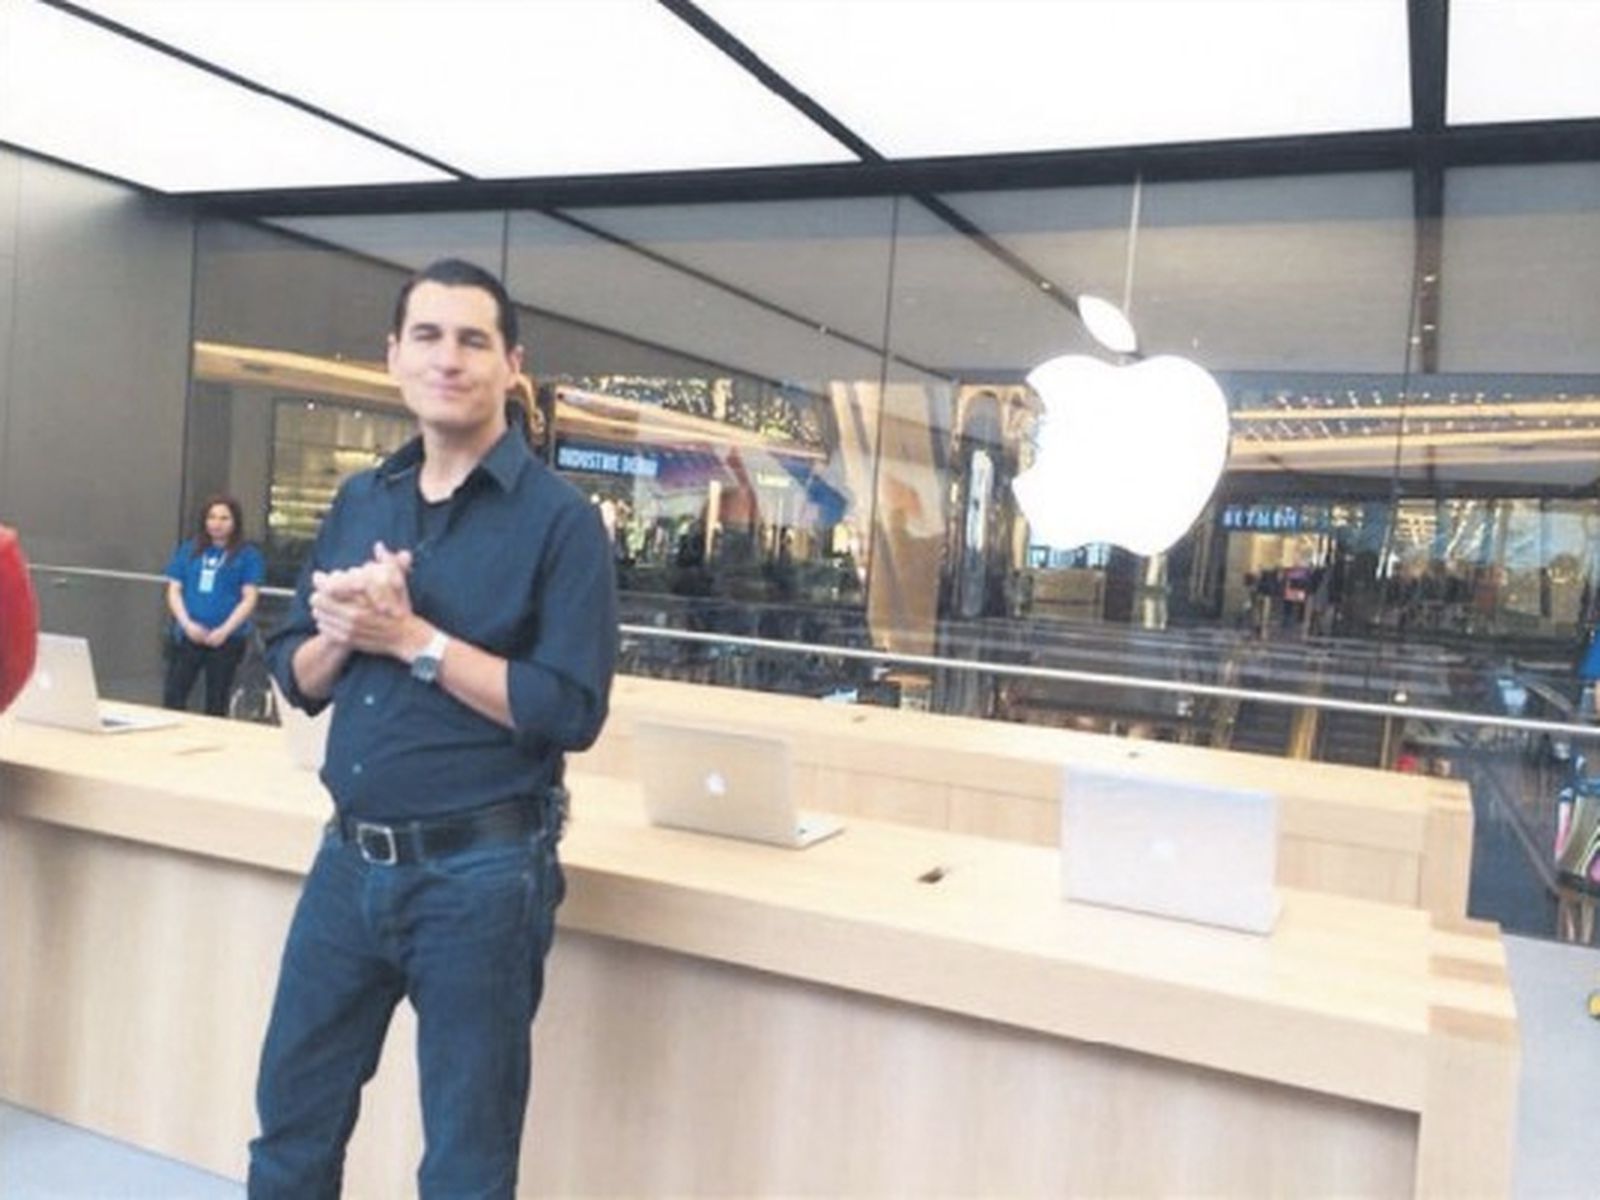 Apple Store : première inauguration en Turquie depuis 2014 🆕